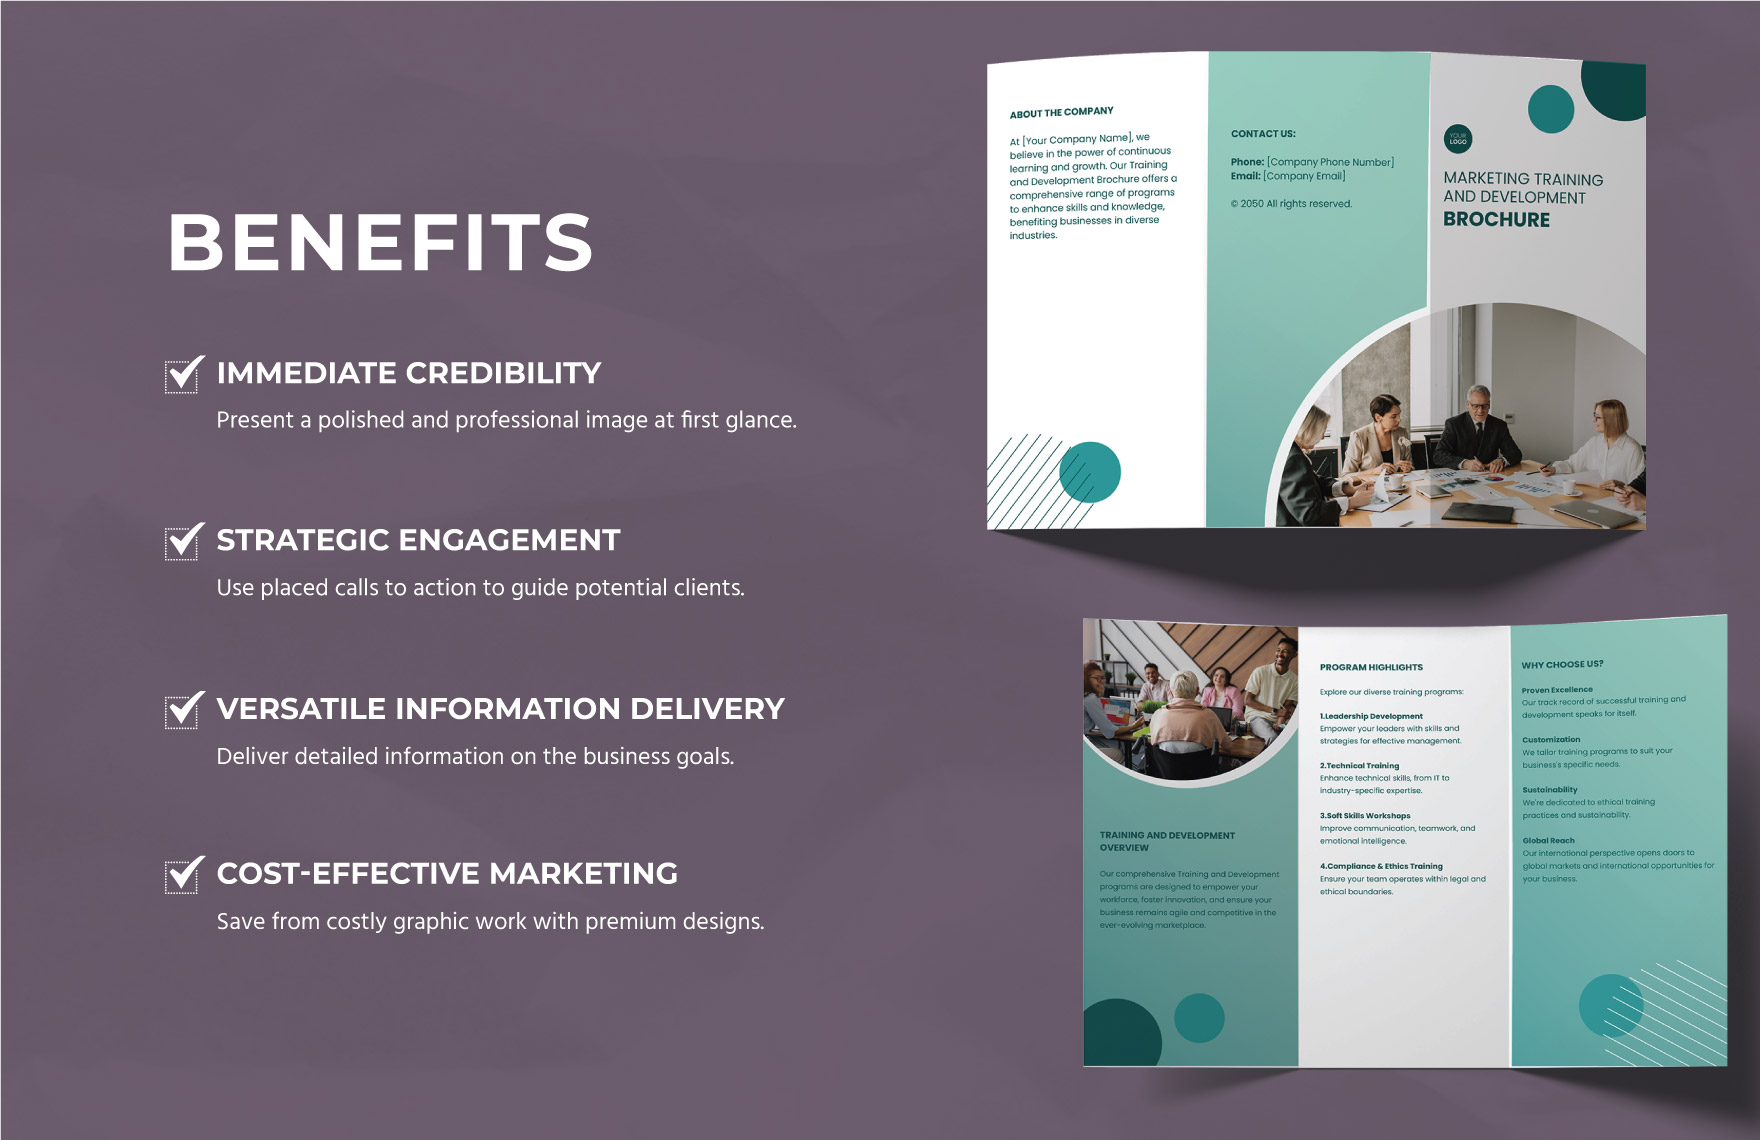 Marketing Training & Development Brochure Template